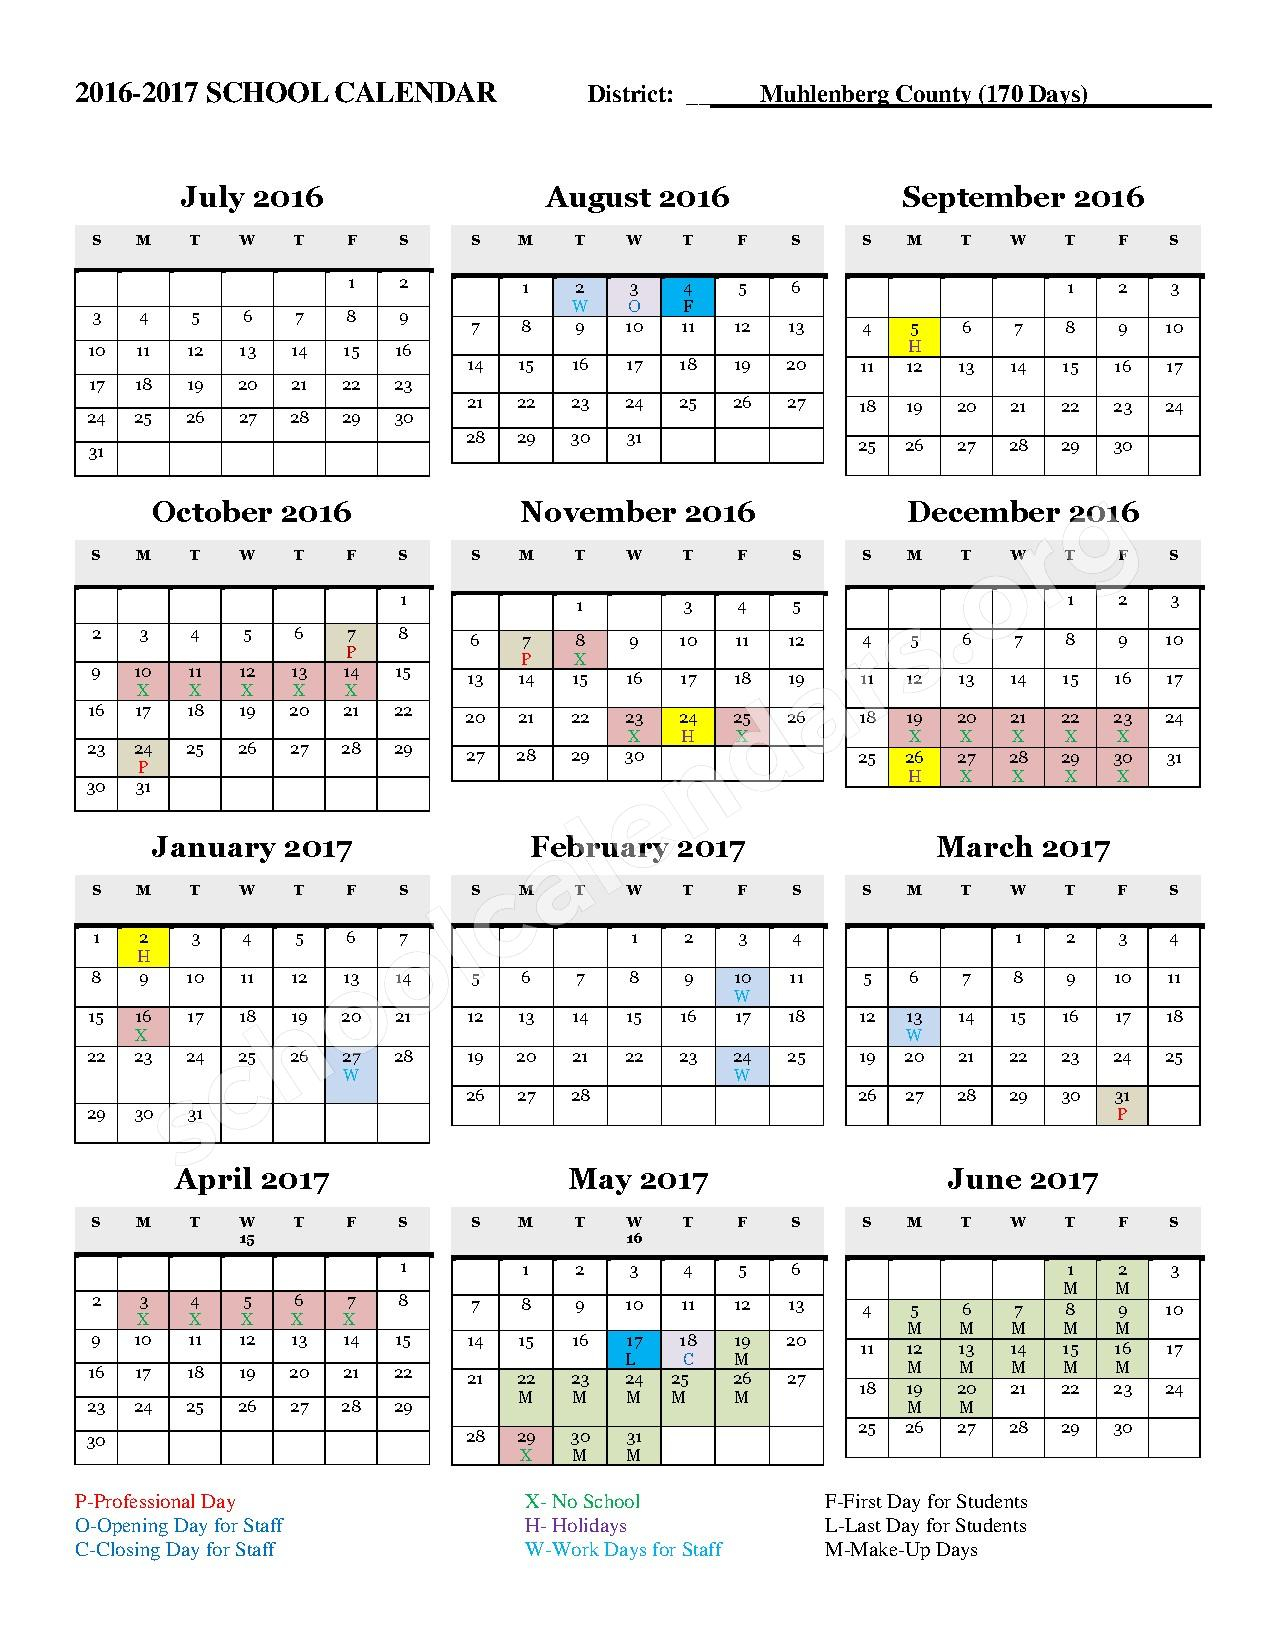 Muhlenberg County School District Calendars Greenville KY